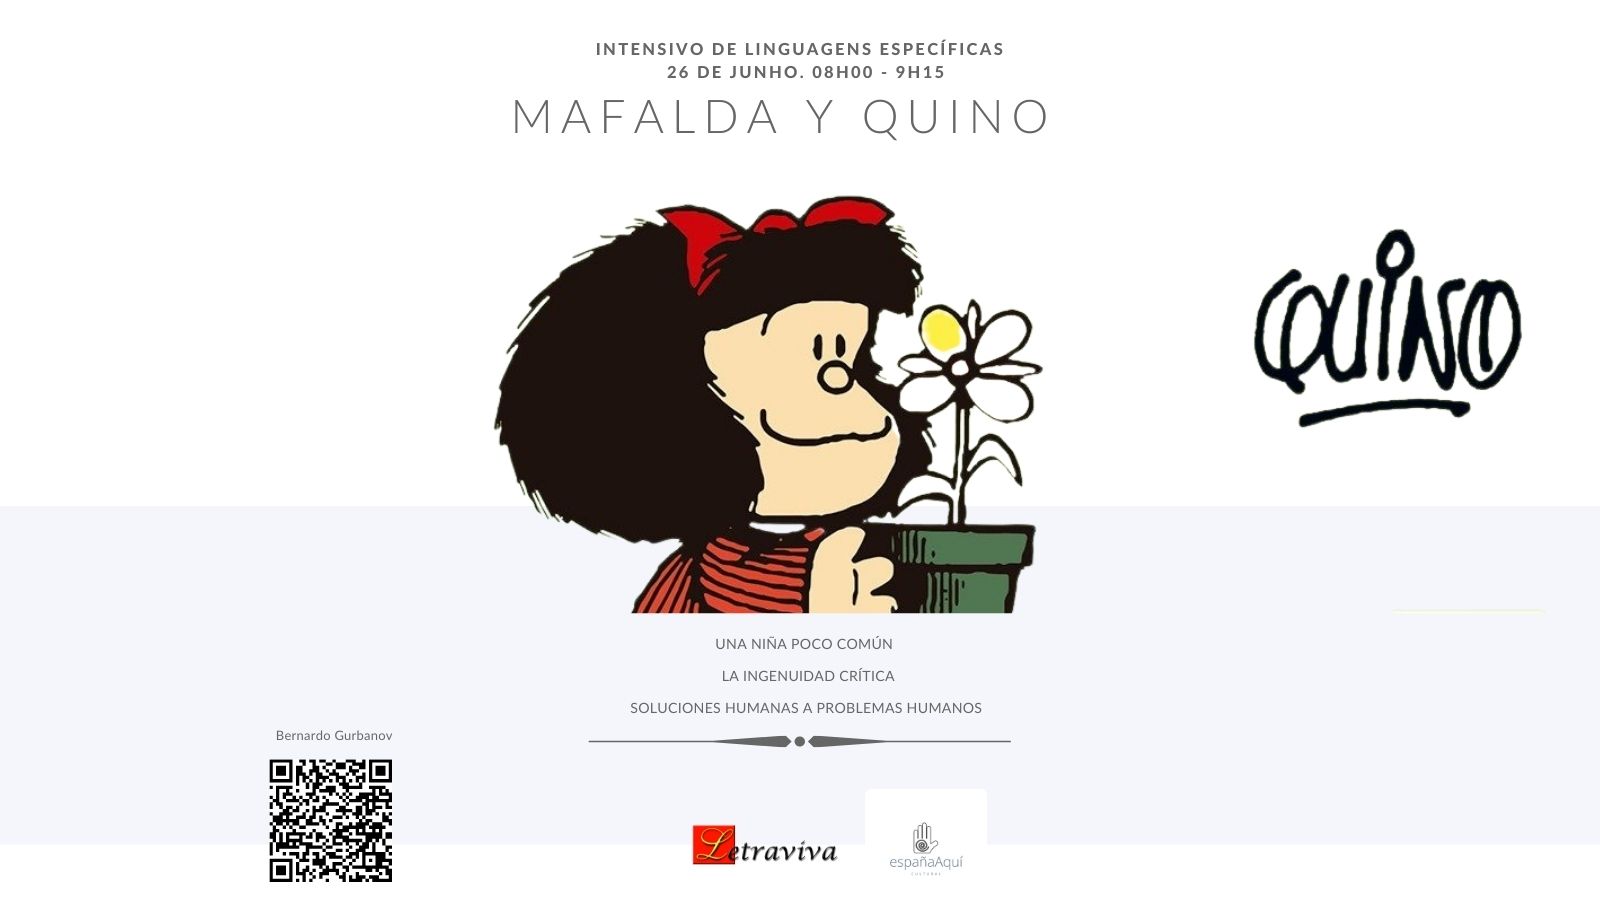 https://www.espanaaqui.com.br/pdf/Junho%202021/Mafalda%20y%20Quino%2026%20de%20Junho.jpg